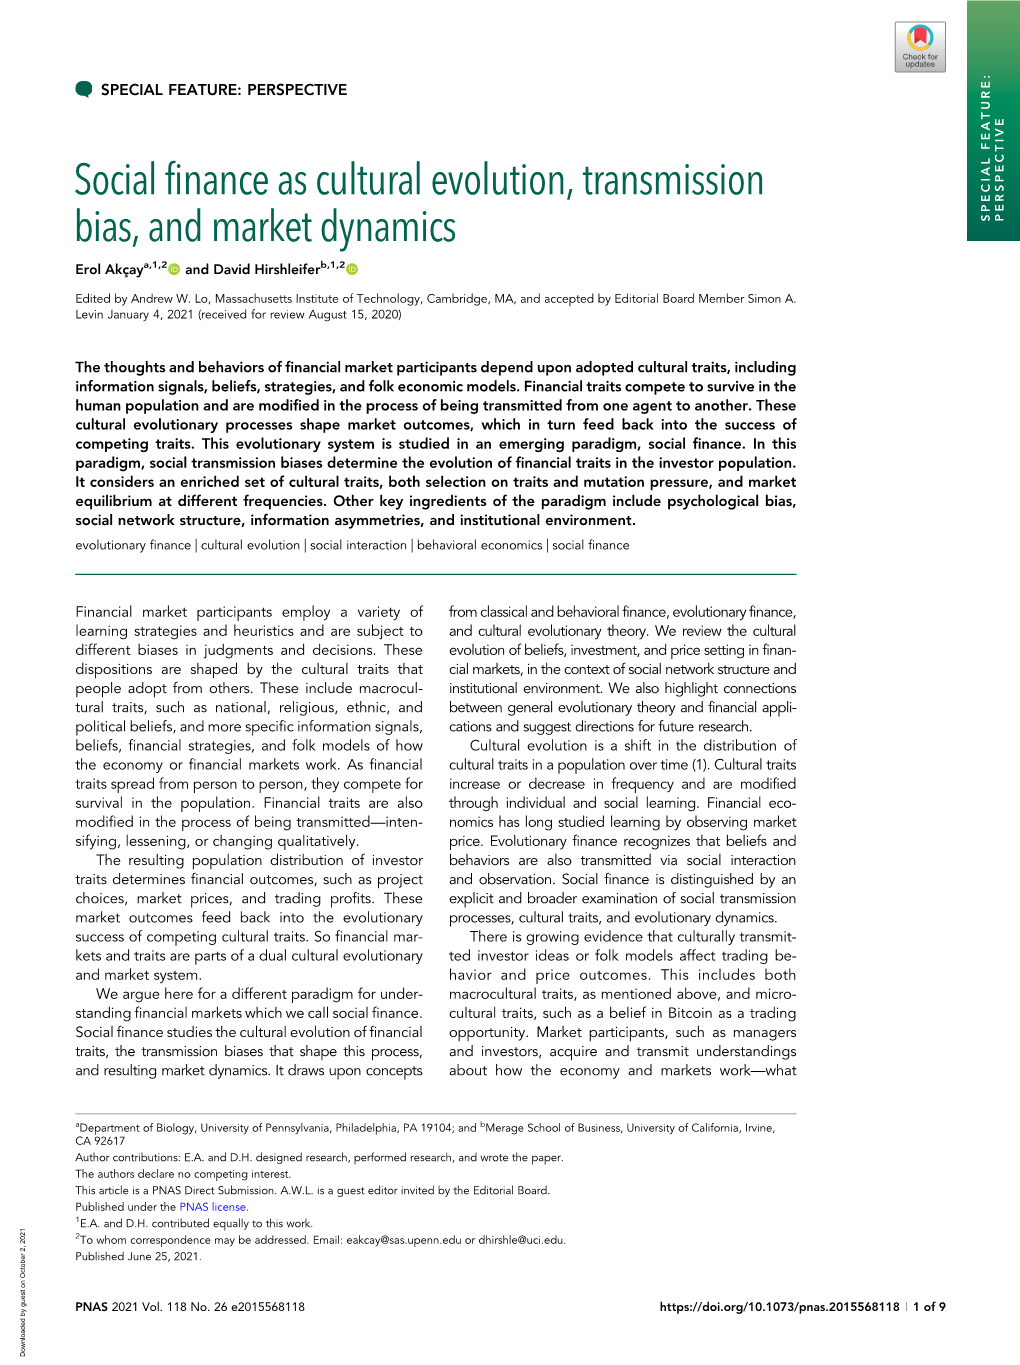 Social Finance As Cultural Evolution, Transmission Bias, and Market